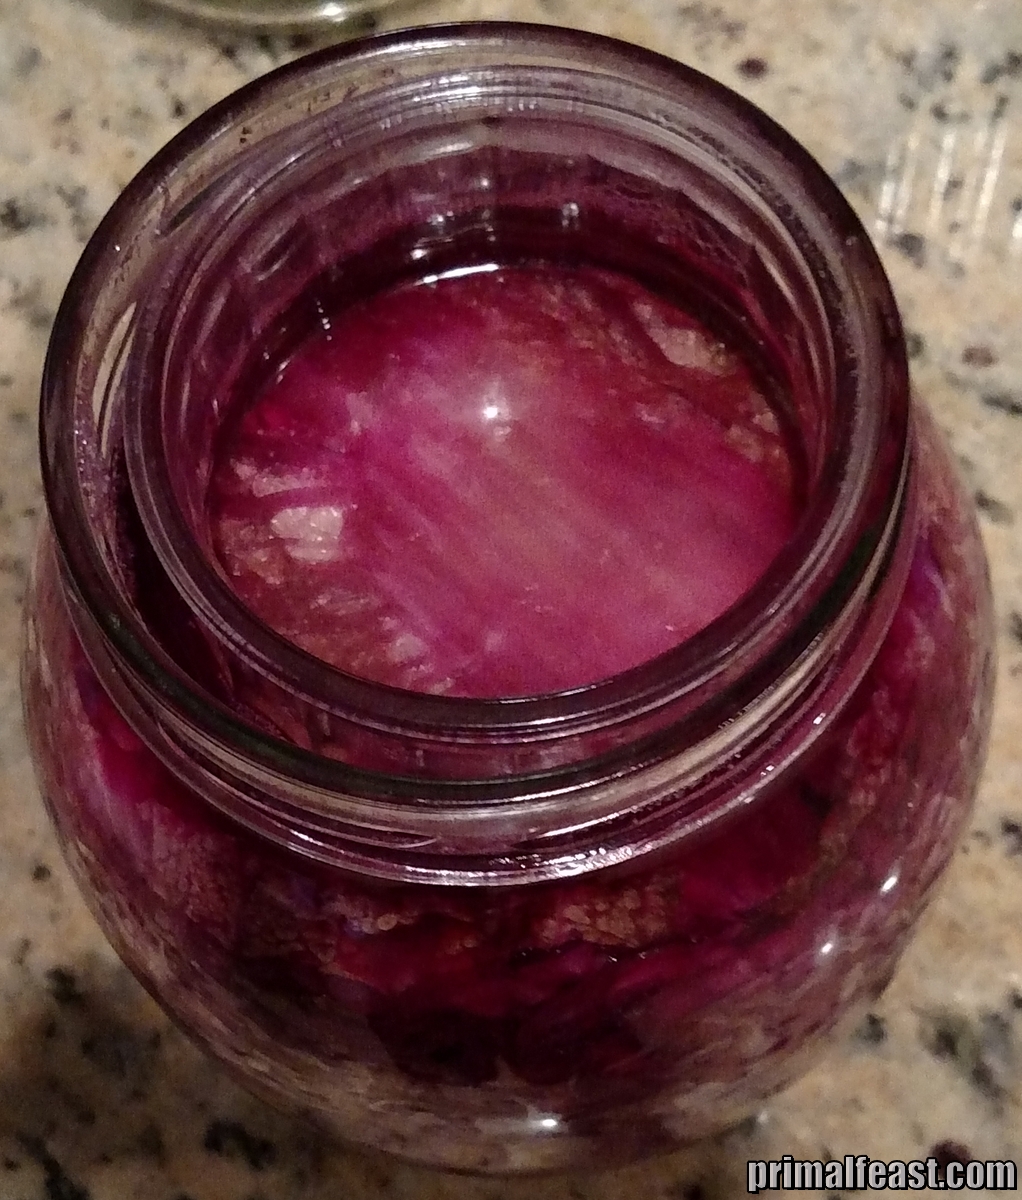 2015-0923-homemade-sauerkraut-005-pf.jpg